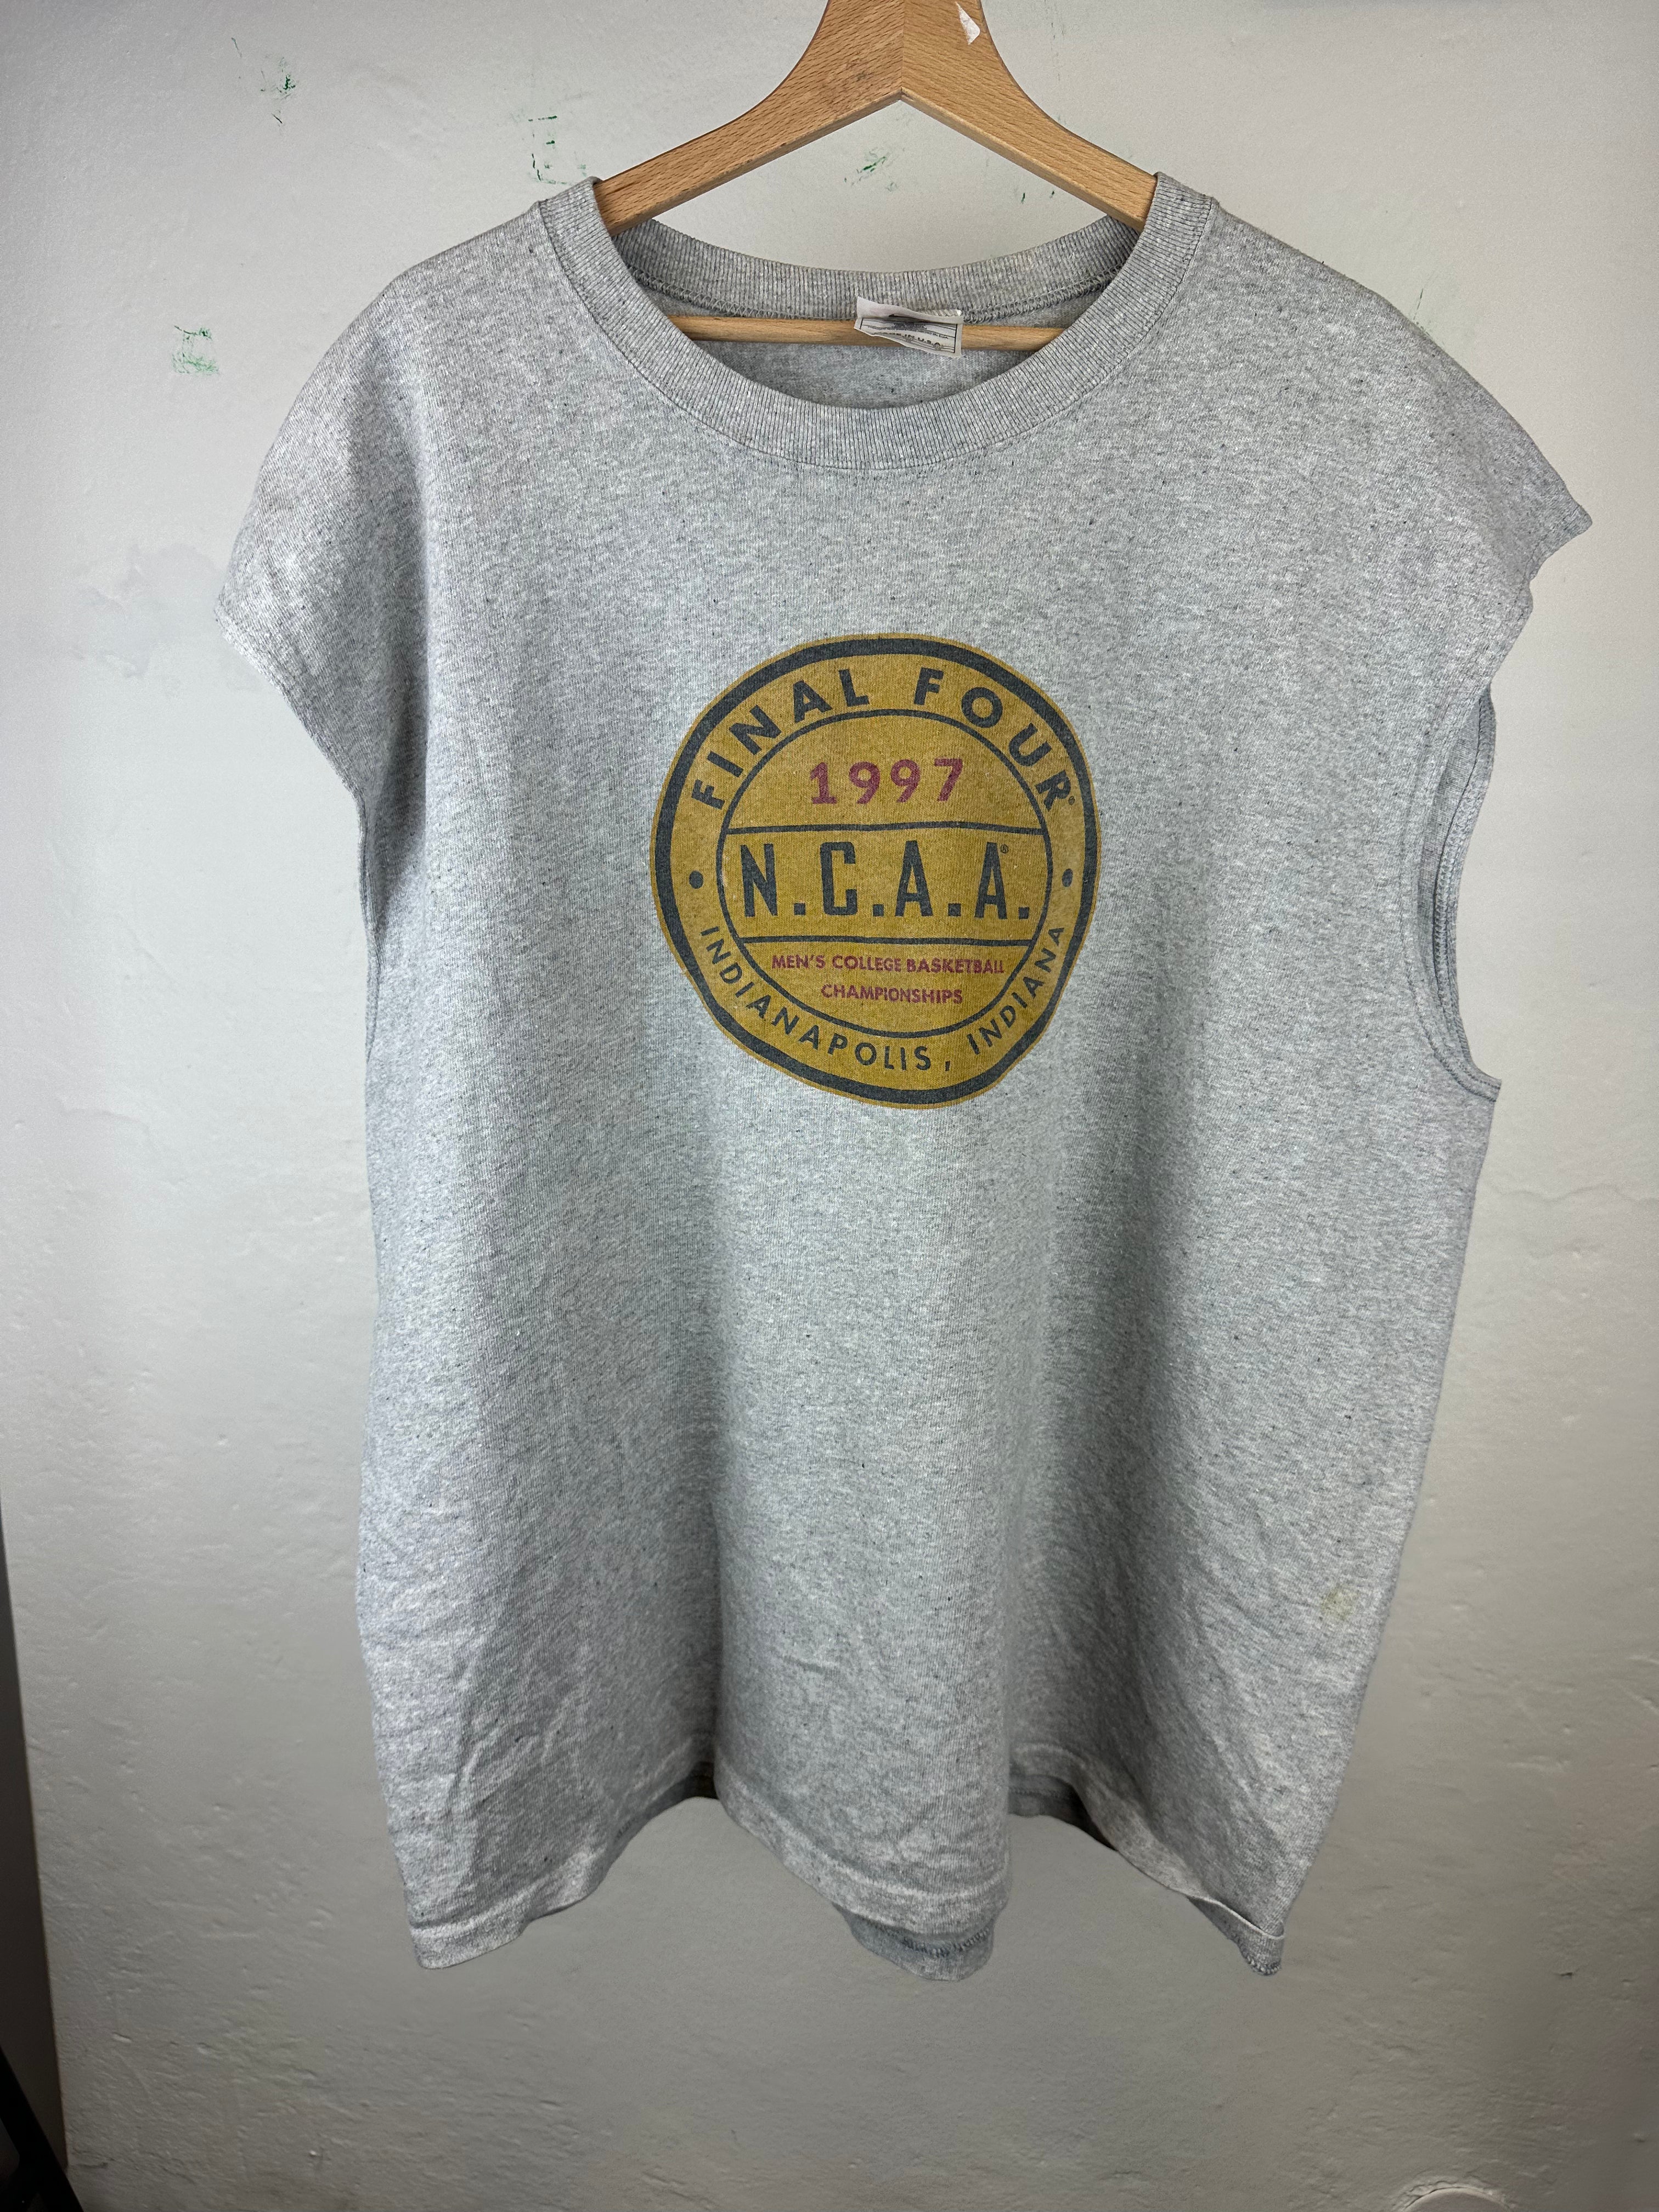 Vintage Nike Sleeveless 1997 t-shirt - size L